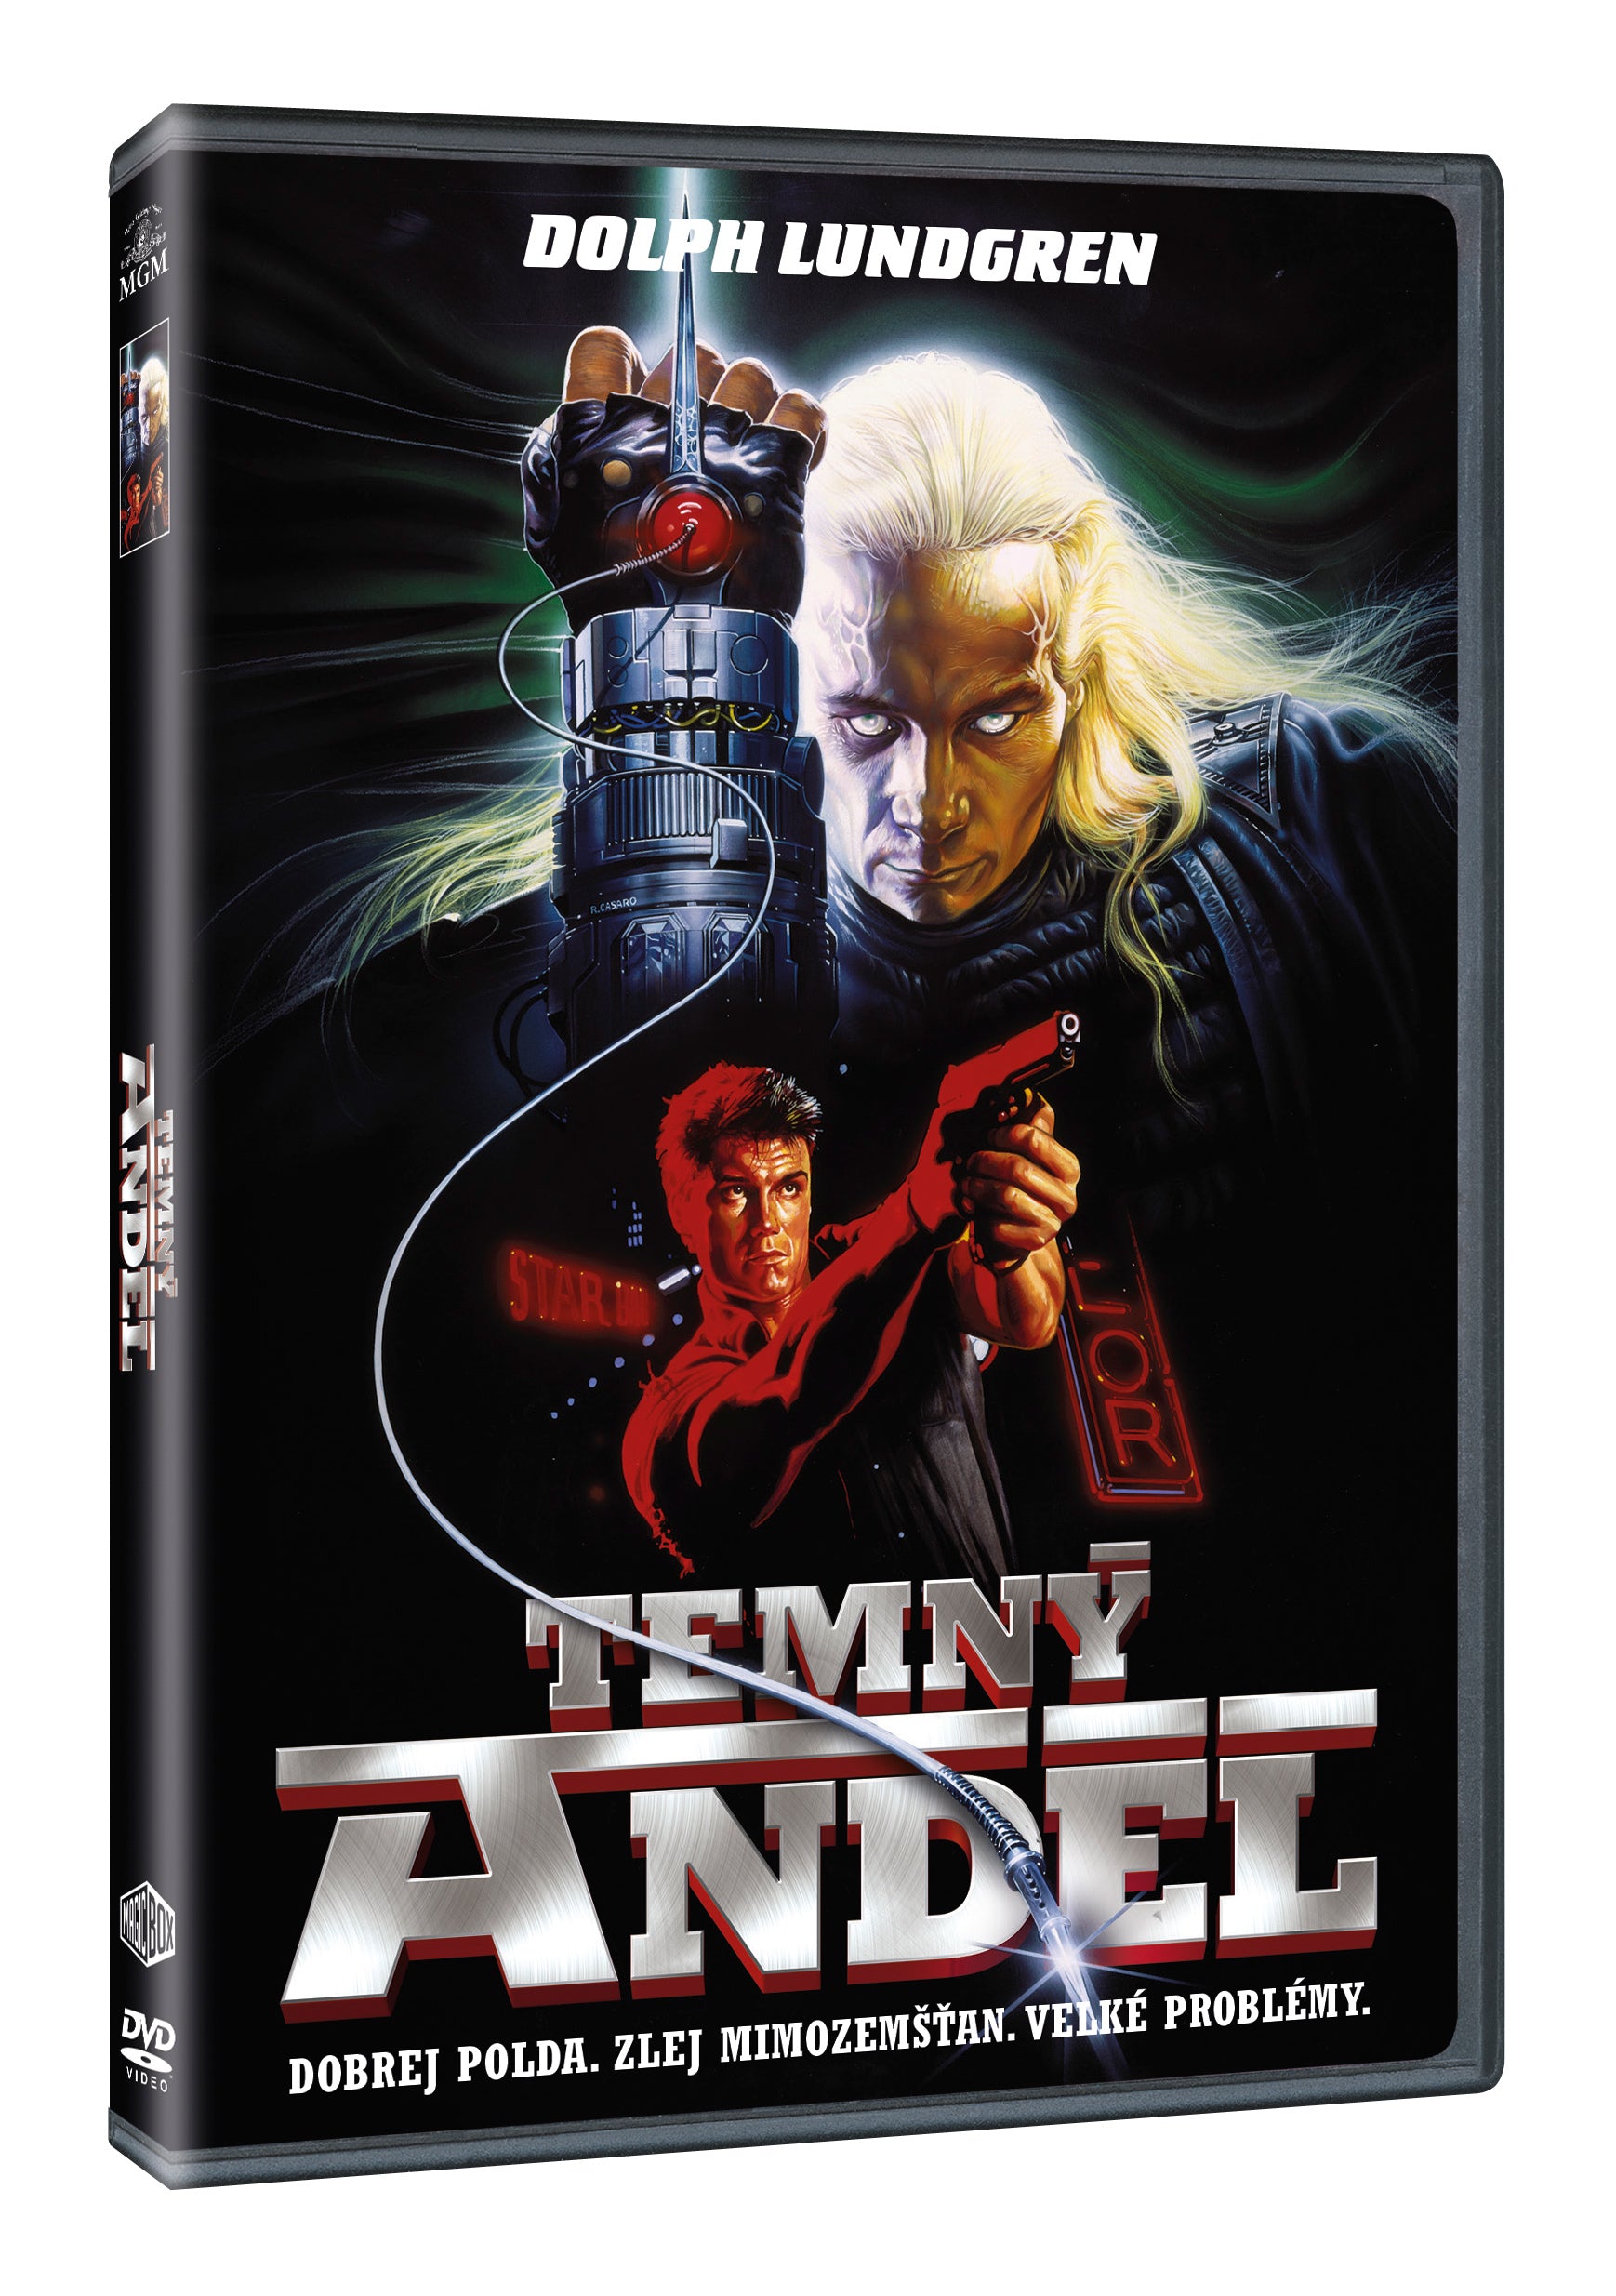 Temny andel DVD / Dark Angel